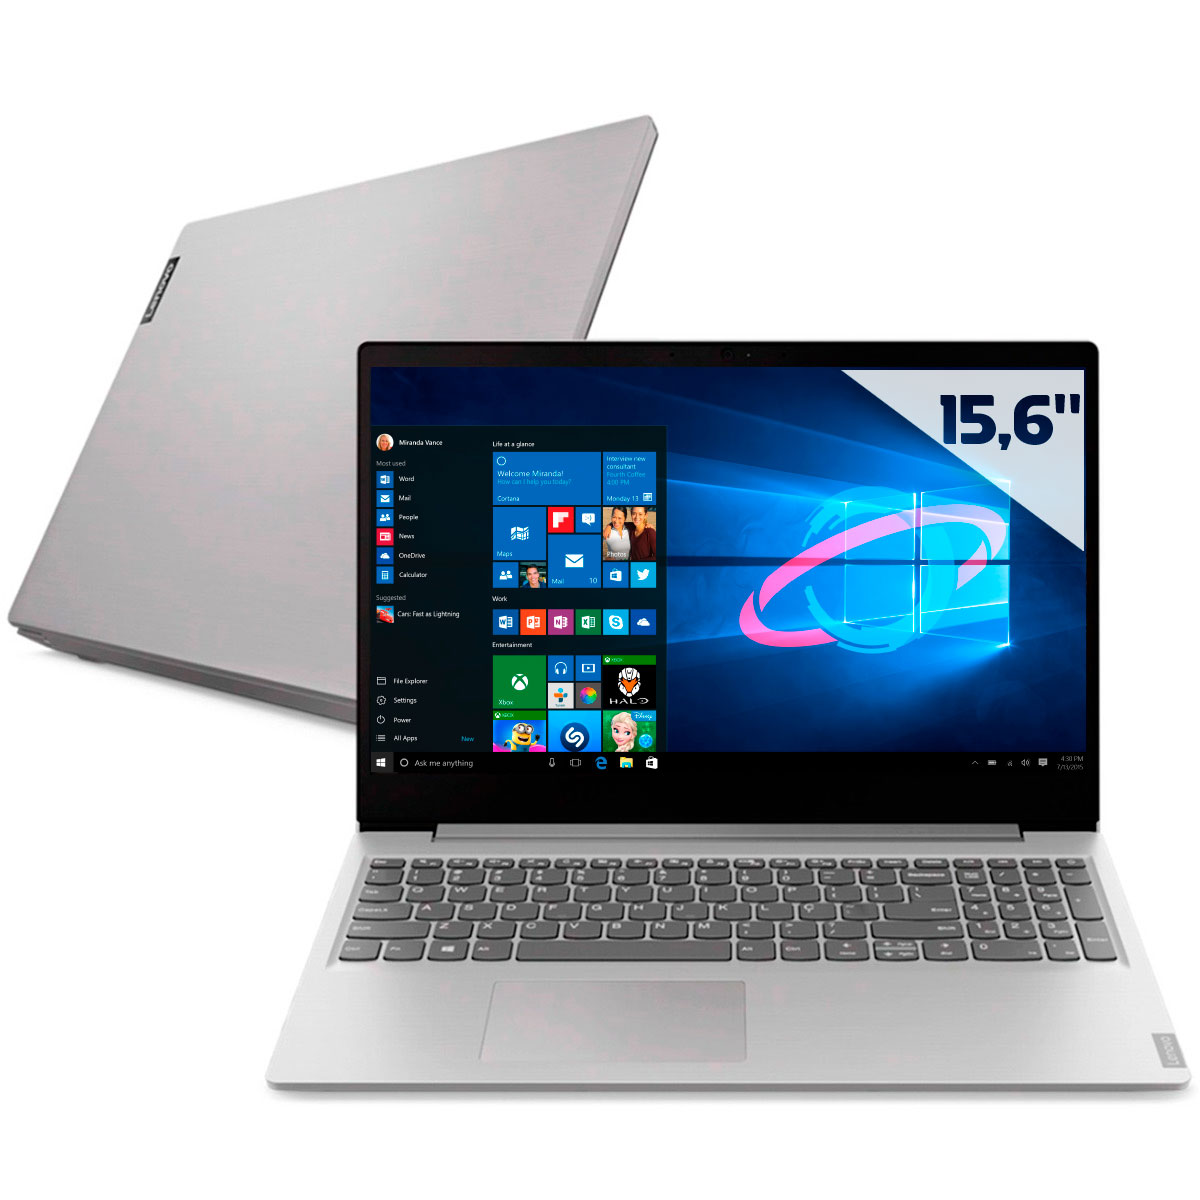 Notebook Lenovo Ideapad S145 - Intel i7 1065G7, 32GB, SSD 256GB, Tela 15.6